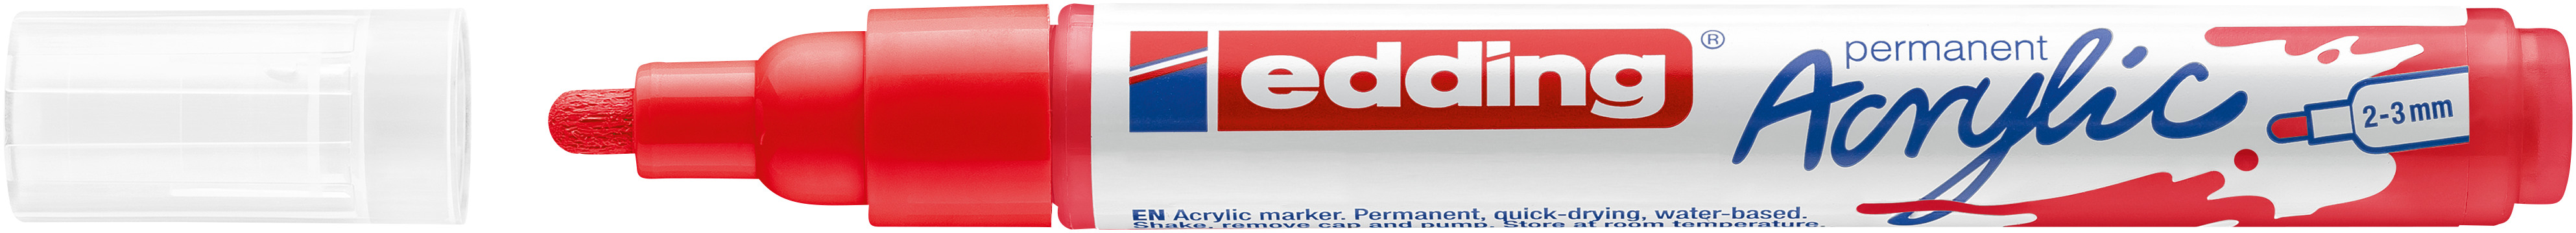 EDDING Acrylmarker 5100 2-3mm 5100-902 traffic red